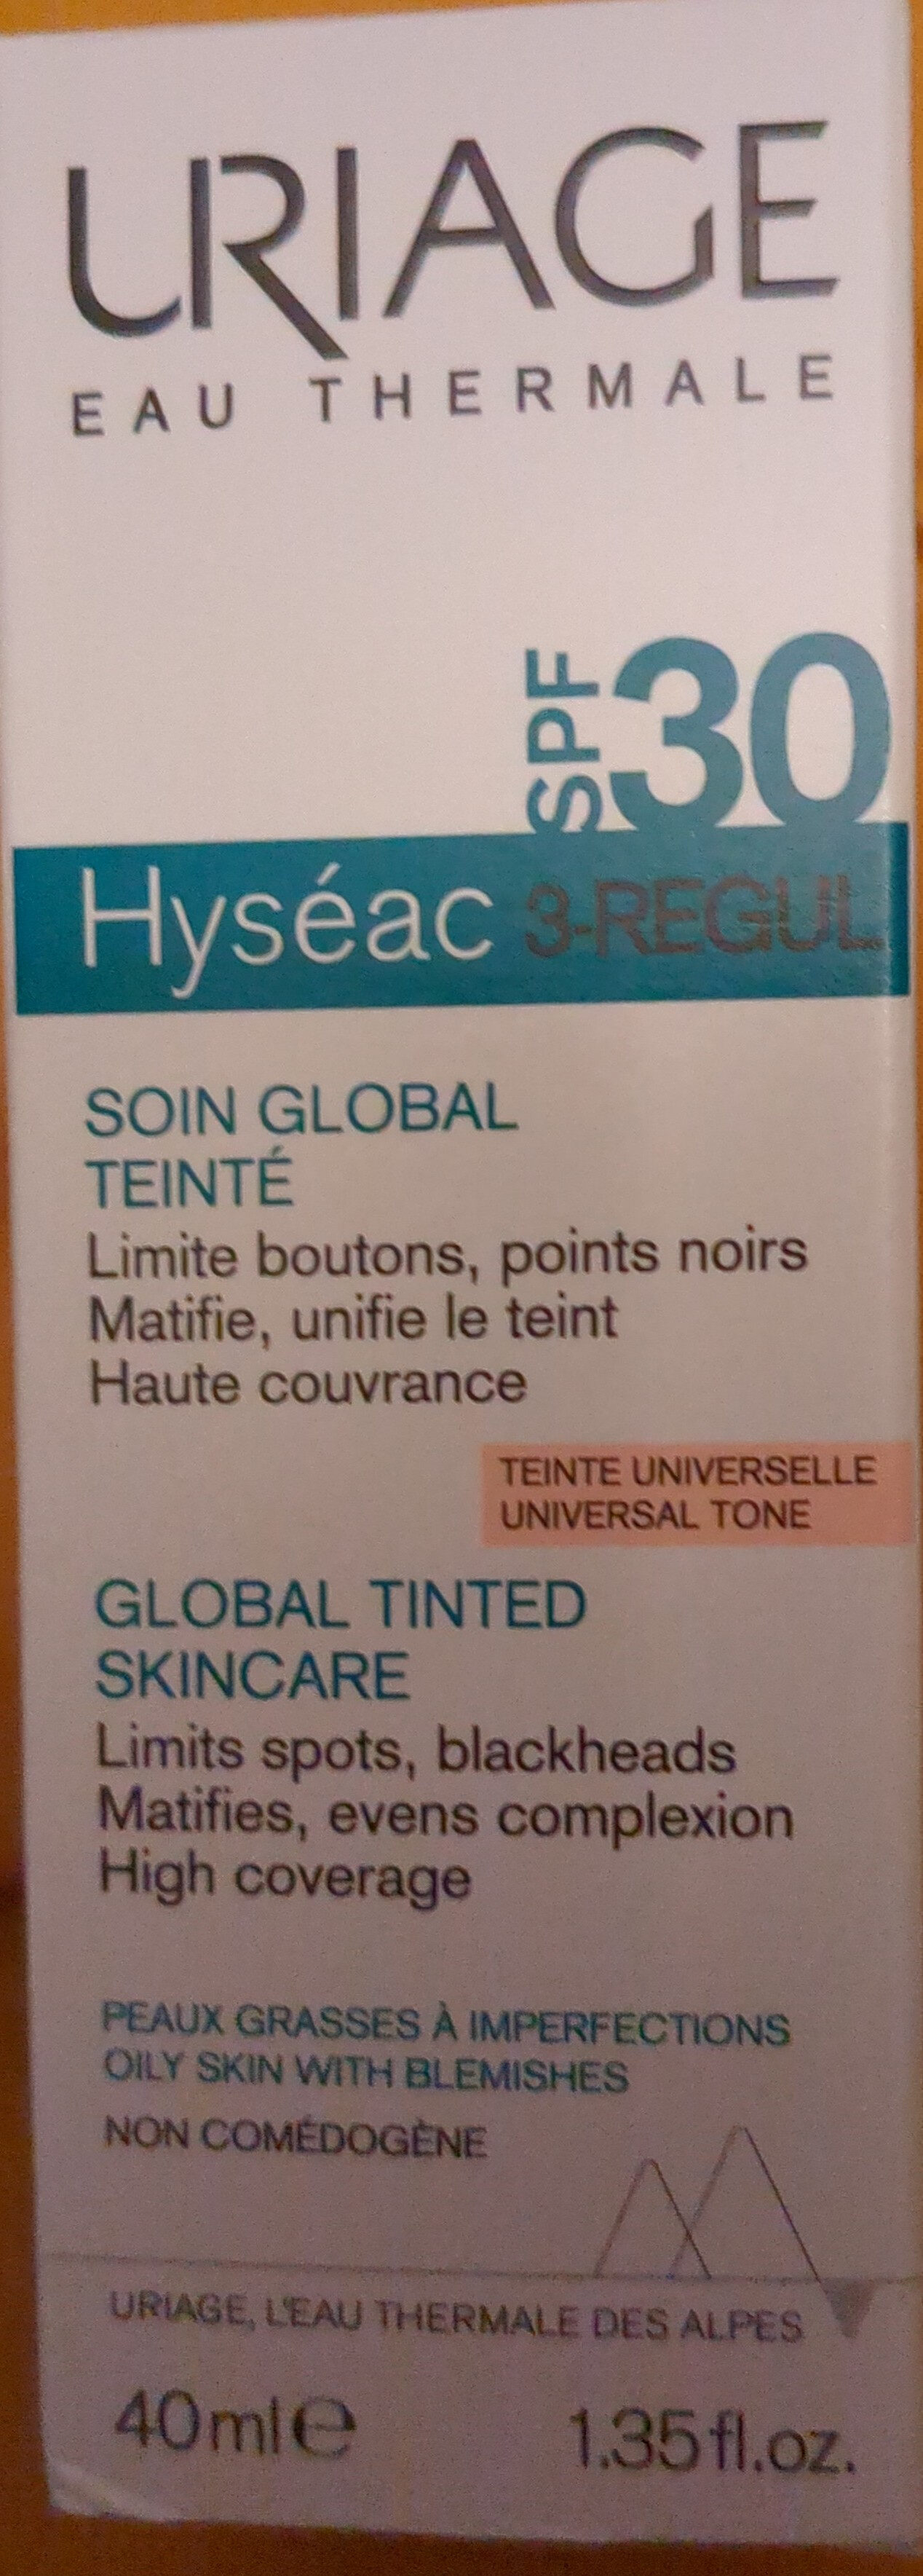 Hyséac 3-REGUL SPF30 - 製品 - fr